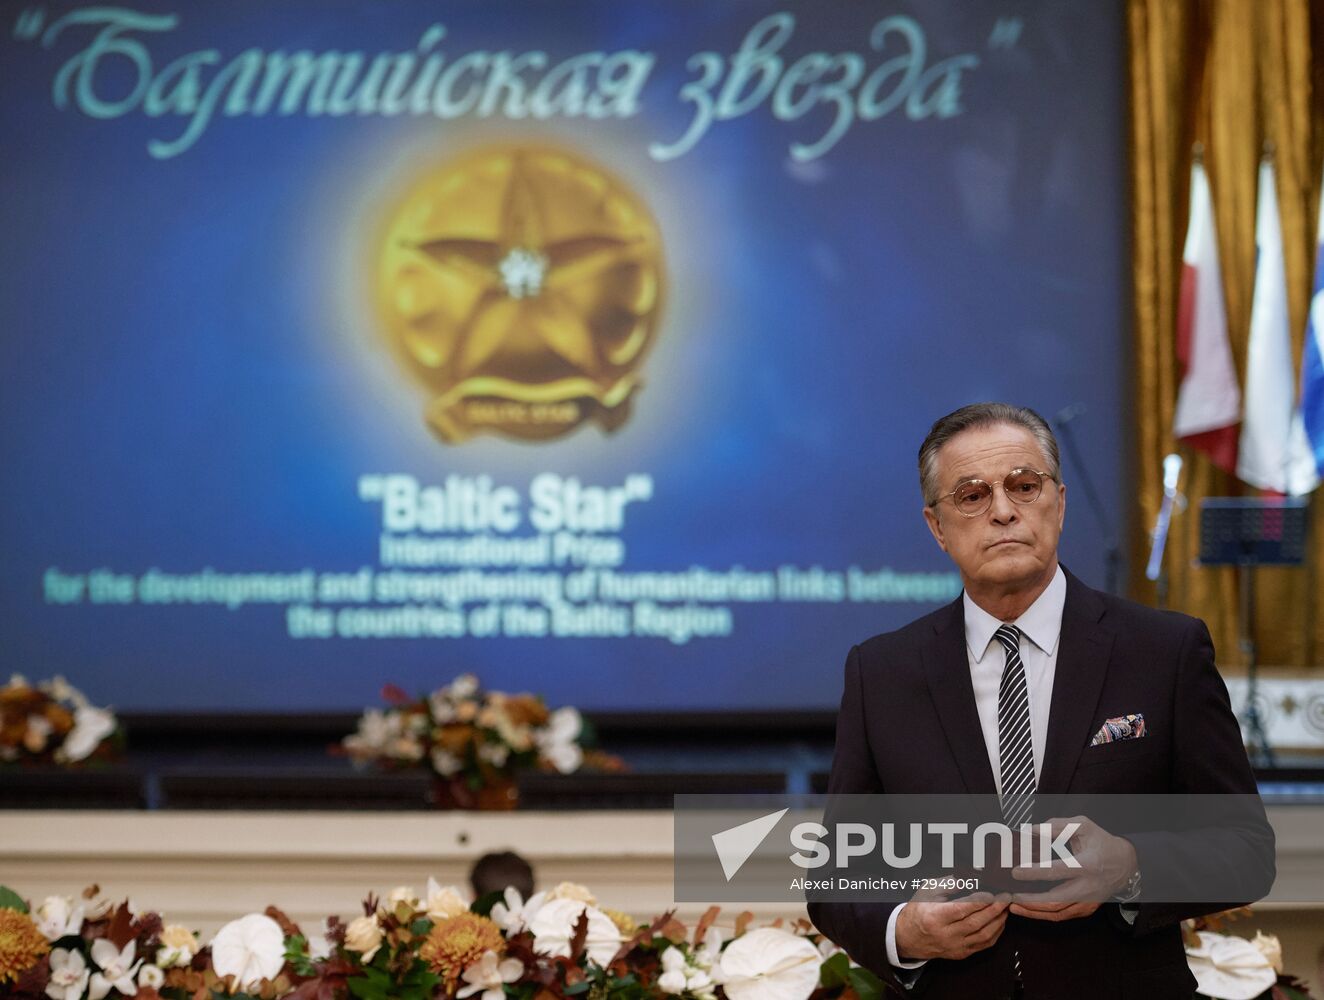 Baltic Star Award ceremony in St.Petersburg